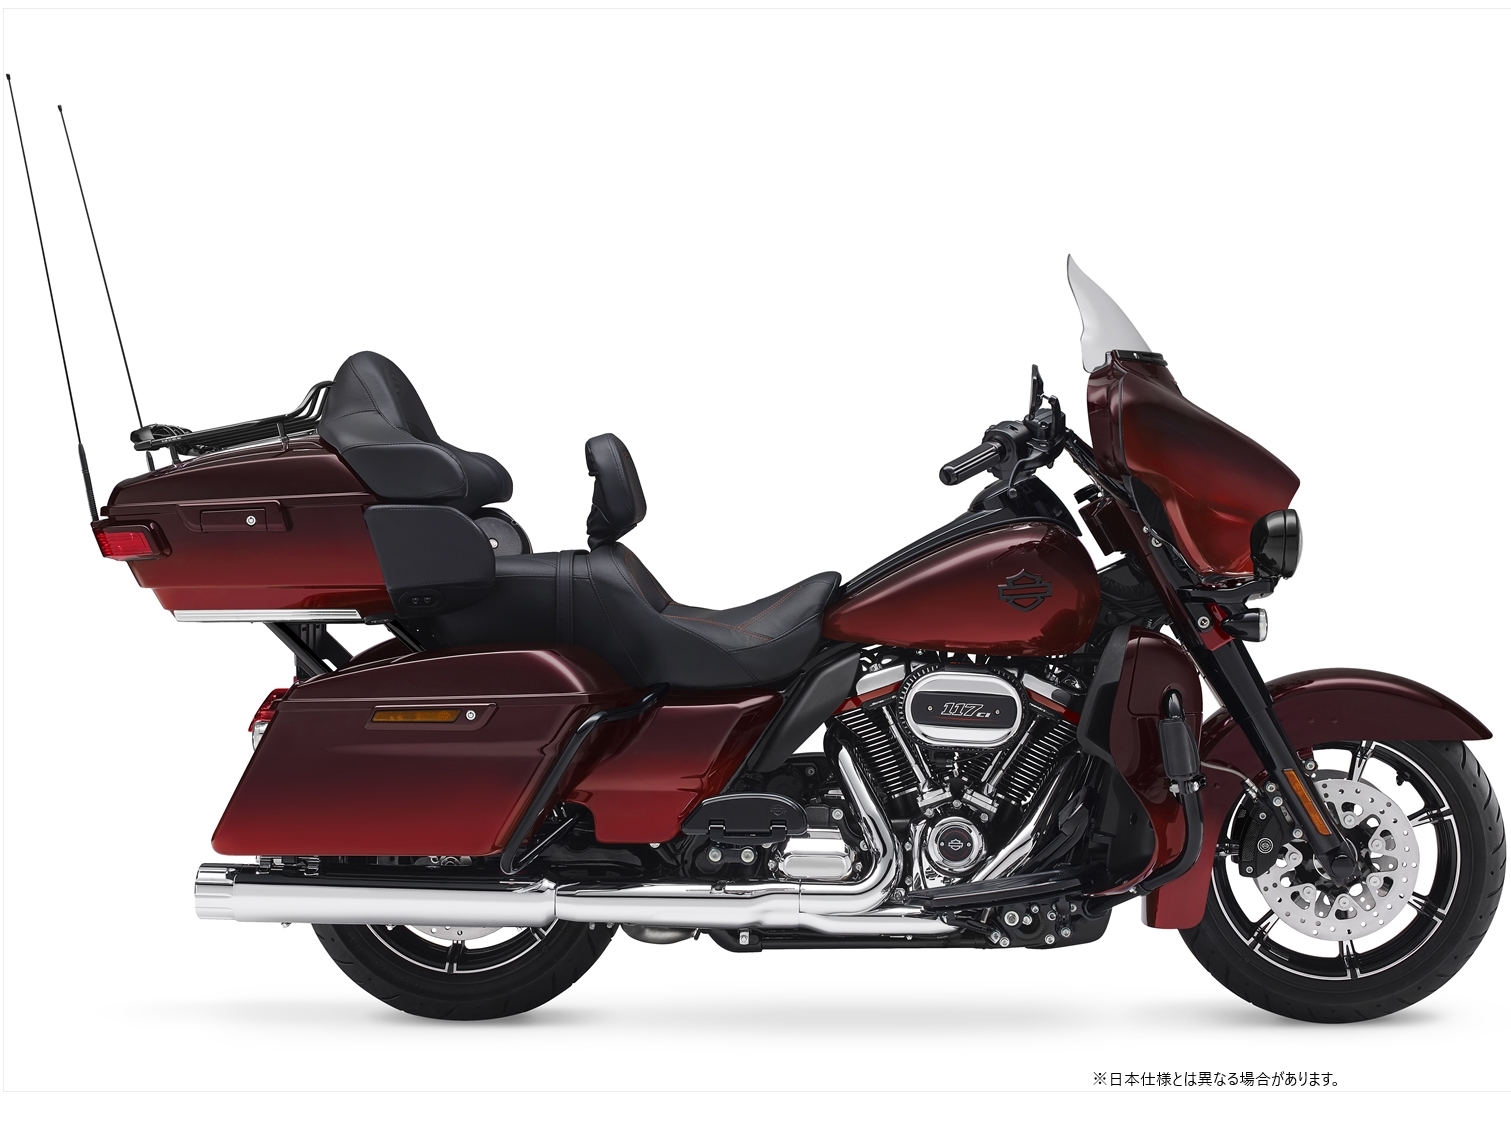 Jual Sparepart Harley Davidson Flhtkse Cvo Limited Limited Review Produk Webike Indonesia